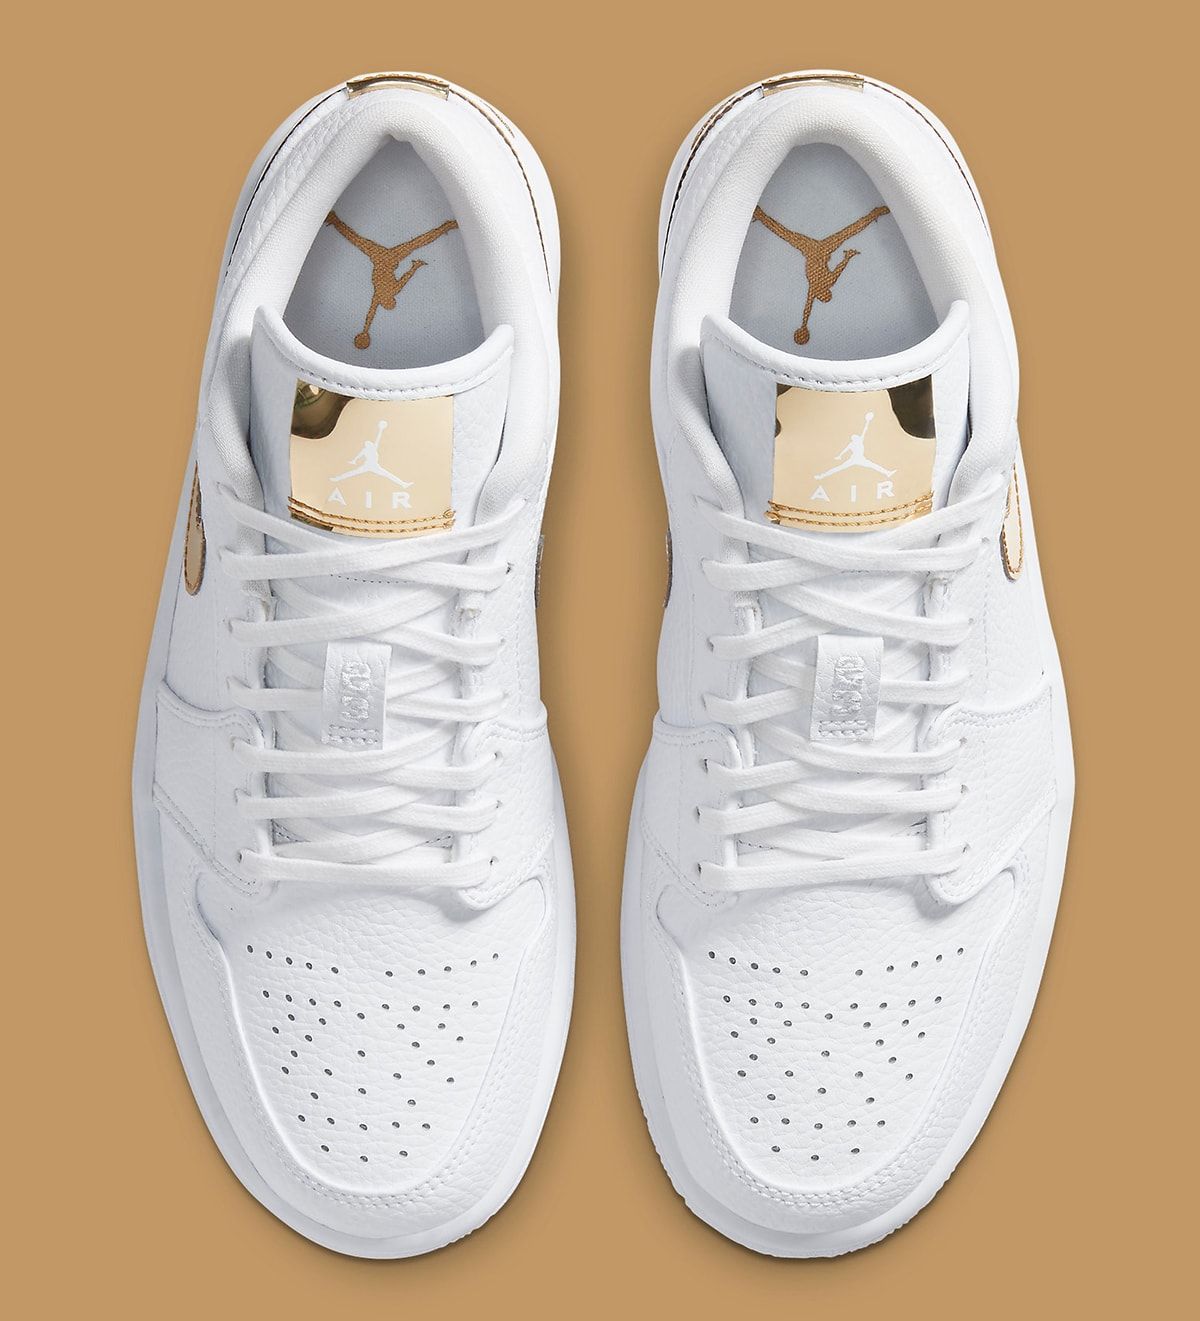 White/Metallic Gold Air Jordan 1 Low Arrives October 2nd | House